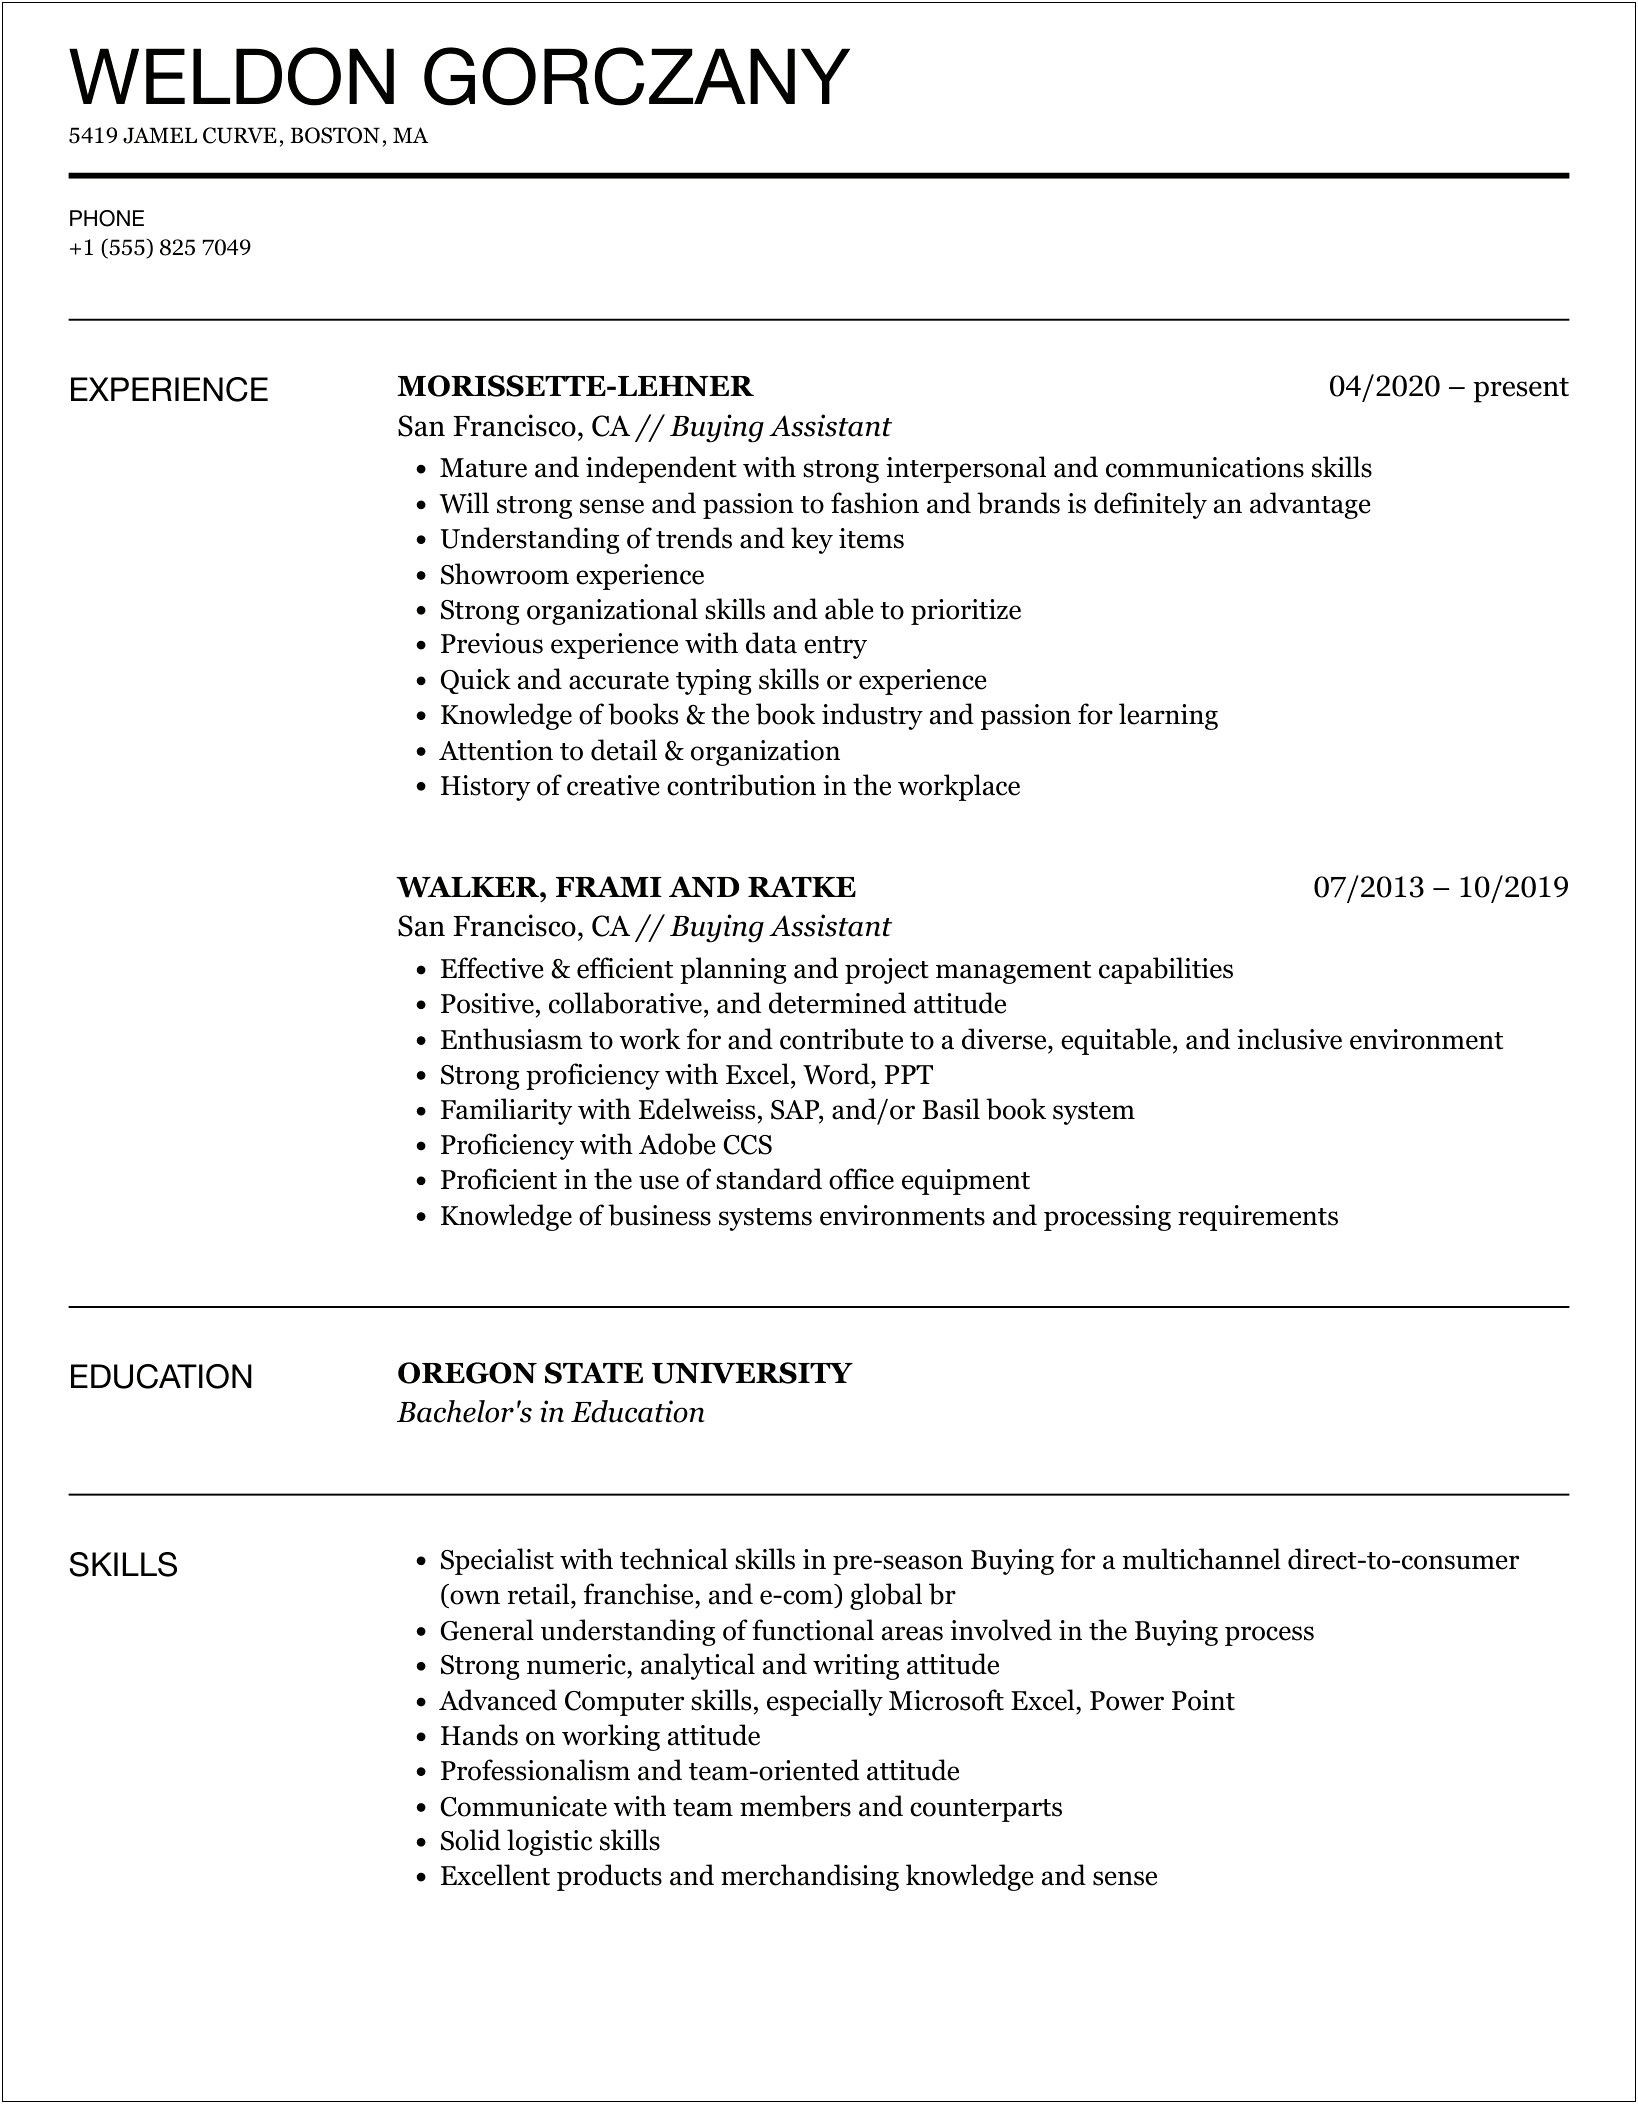 Administrative Jobs Ticket Broker Buying Reselling Description Resume